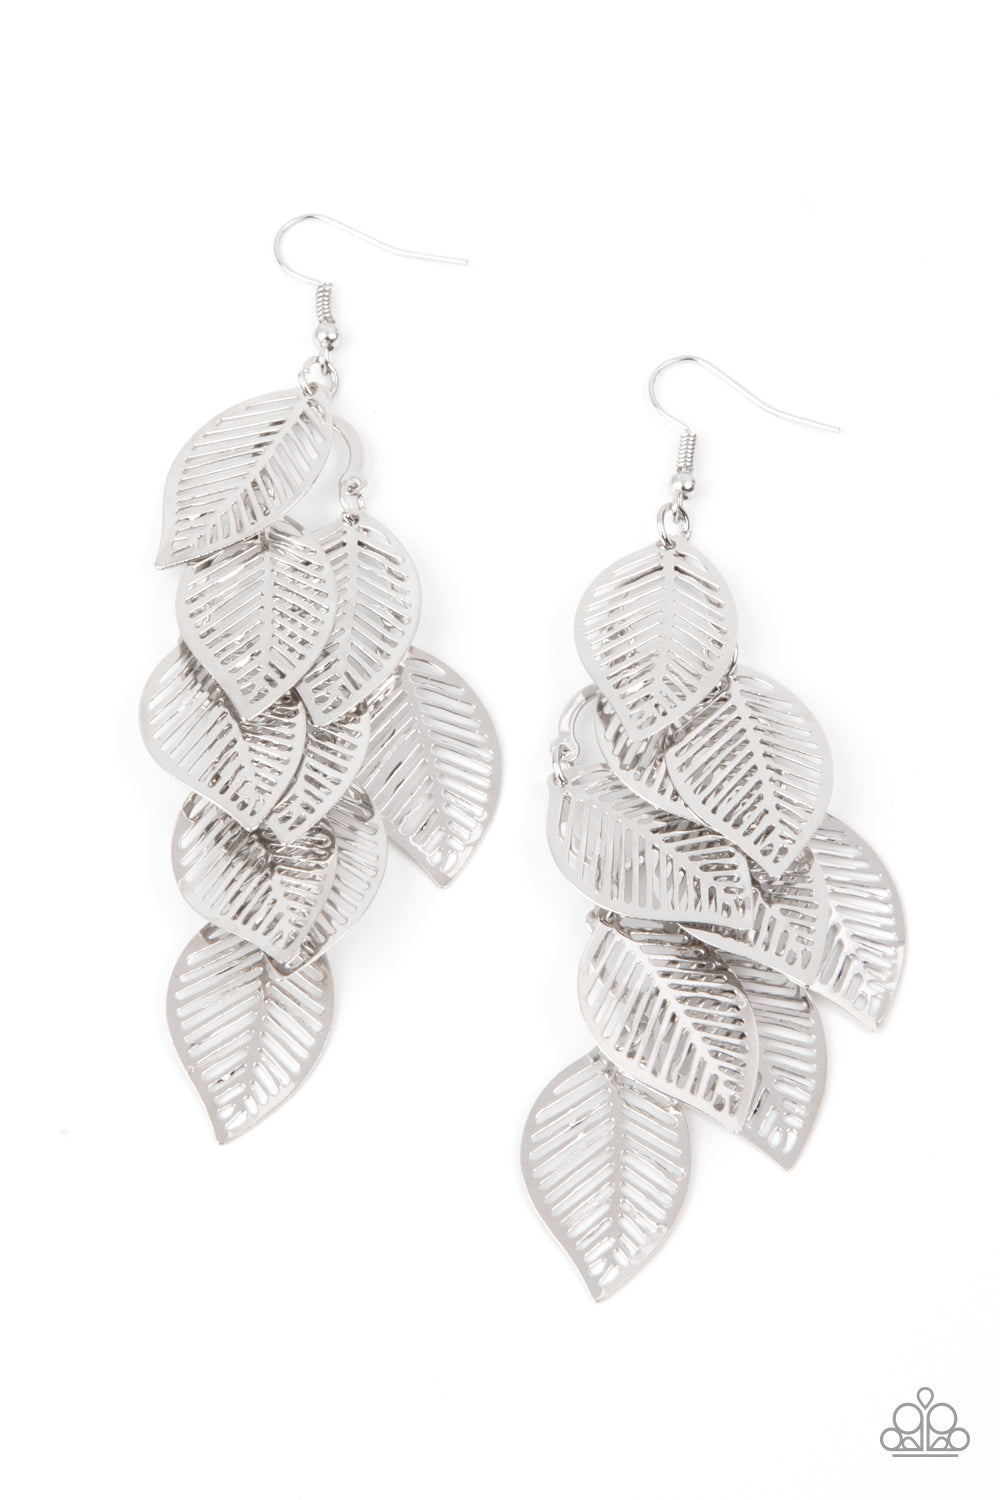 Limitlessly Leafy - silver - Paparazzi earrings